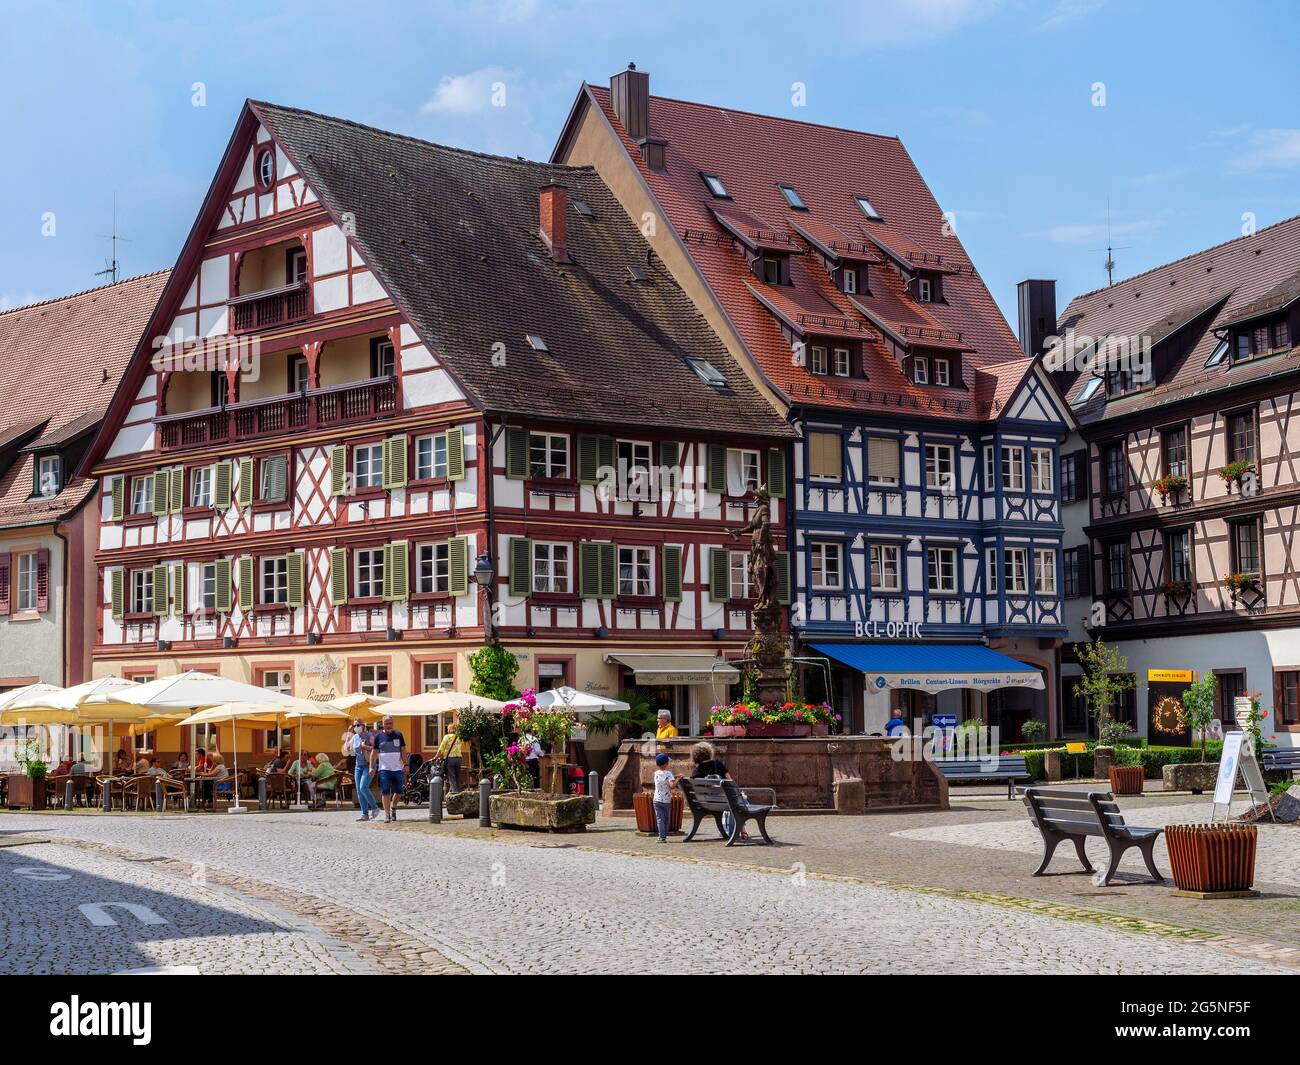 Place du marché, Gengenbach, Ortenaukreis, Bade-Wurtemberg, Allemagne, Europe Banque D'Images